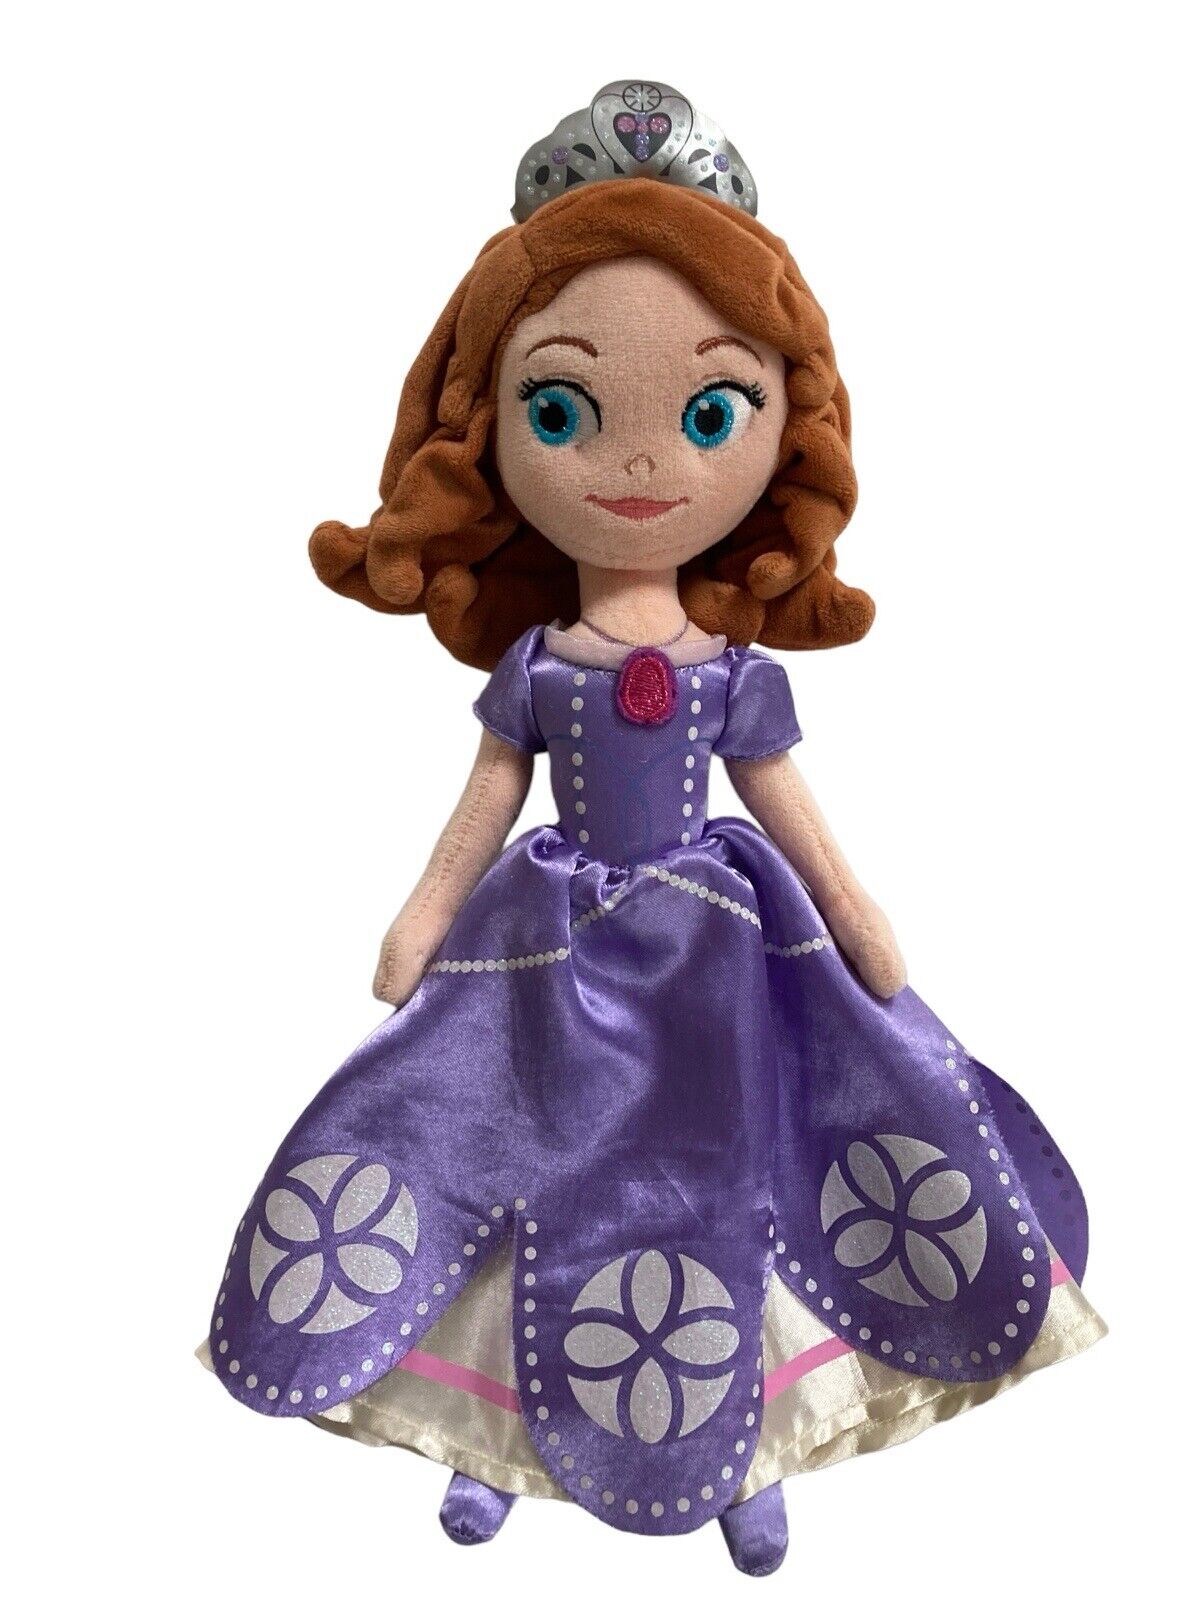 Disney Store Sofia the First 12” Stuffed Plush Princess Doll